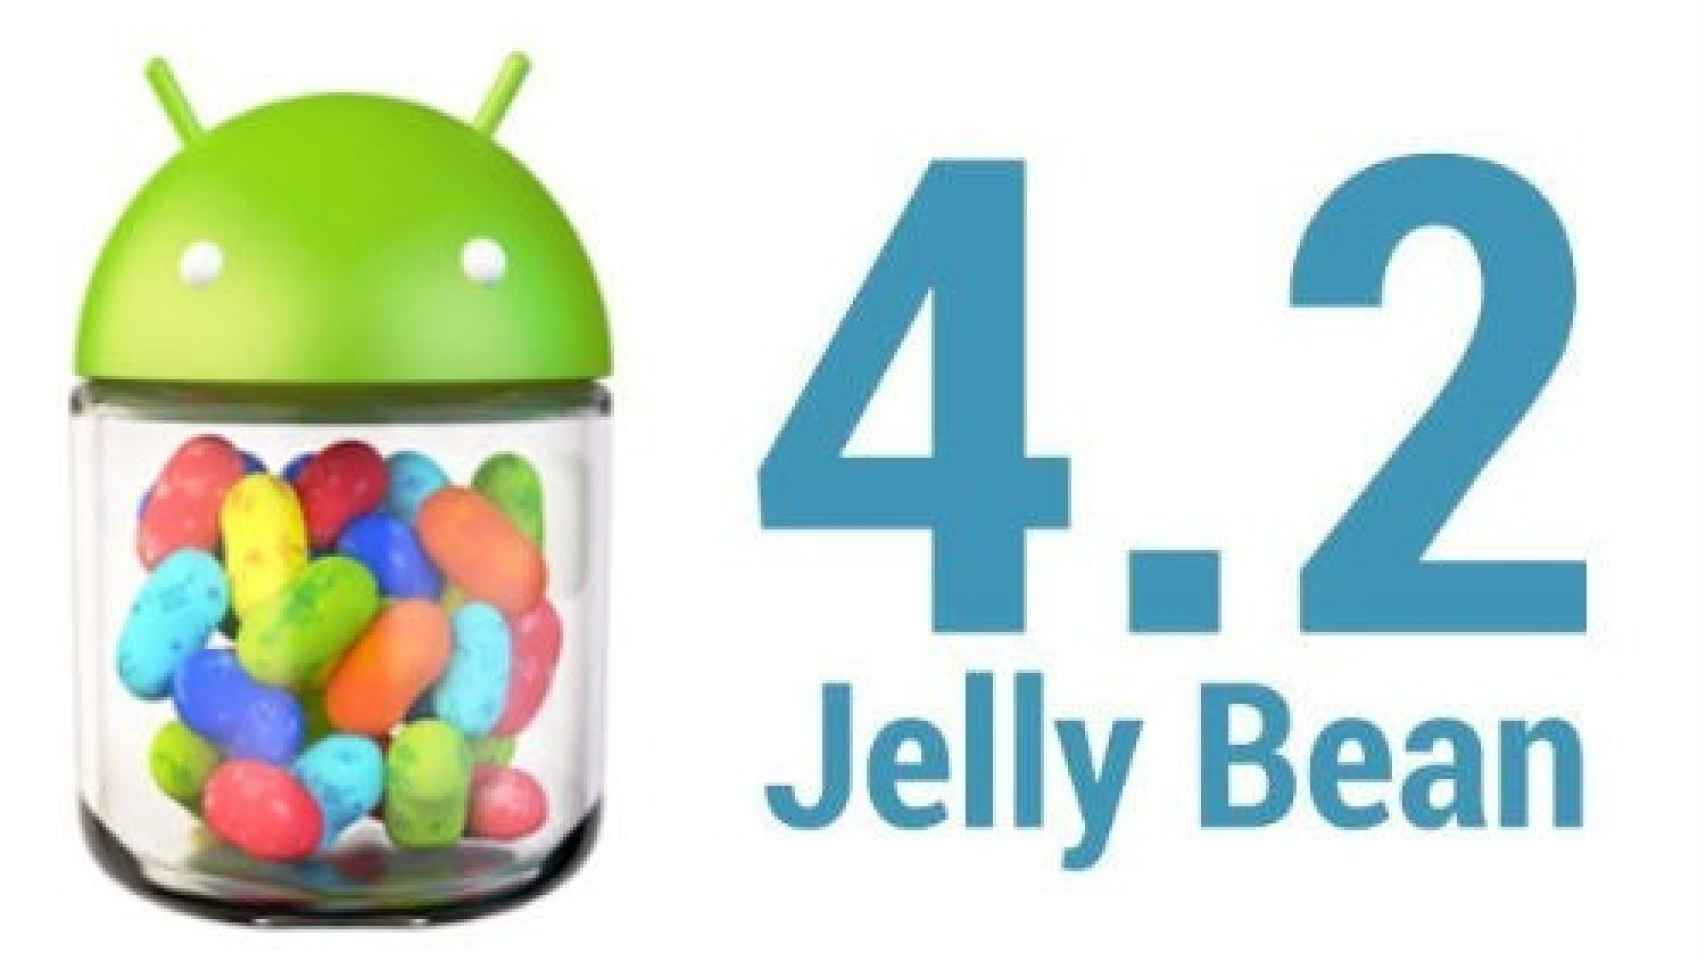 Dale a tu Android una apariencia Android 4.2 Jelly Bean a lo Nexus 4